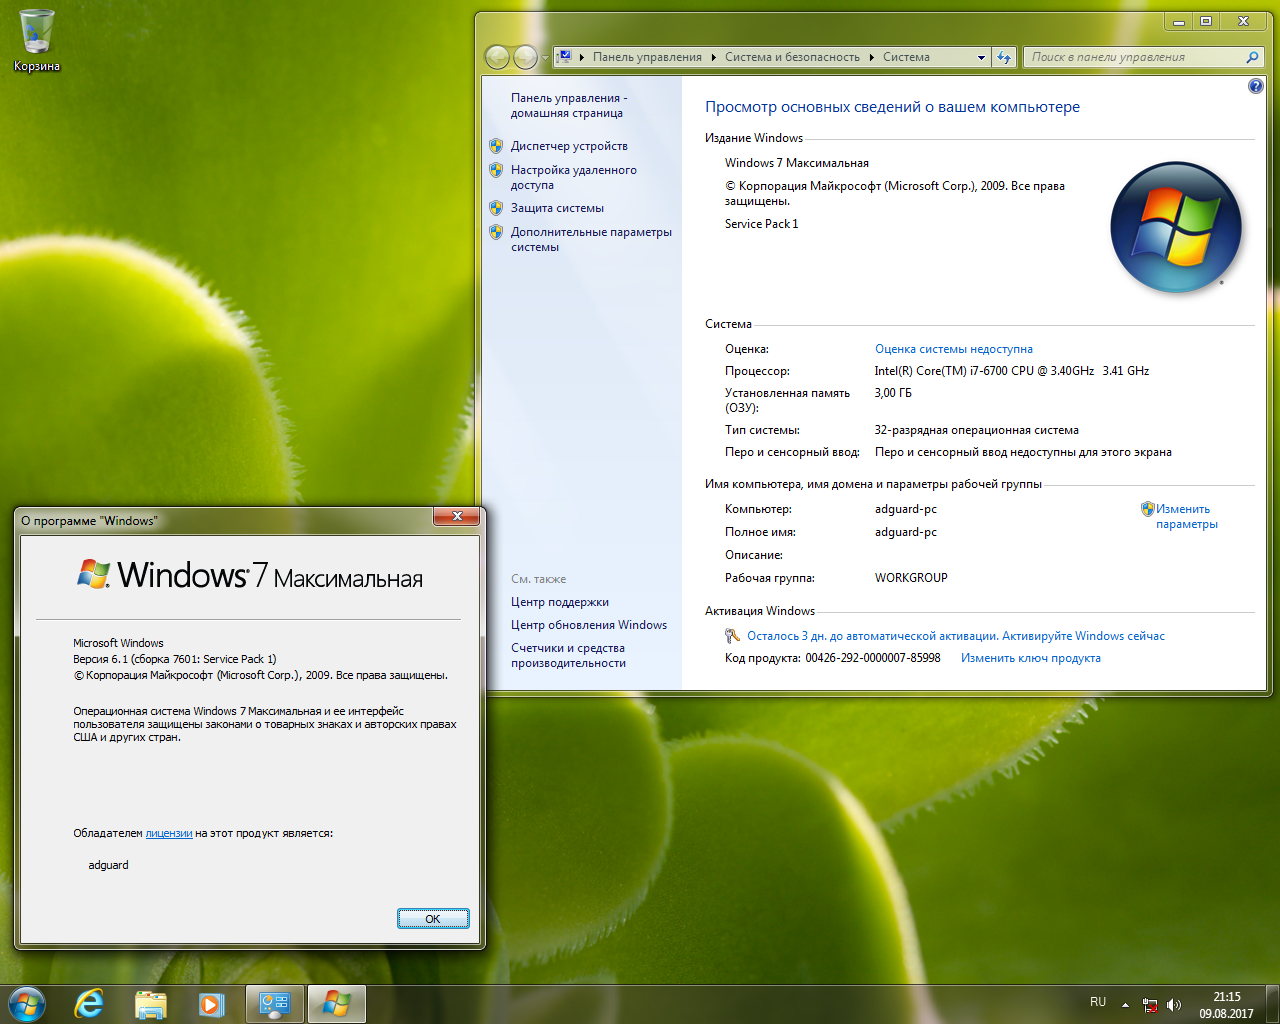 Активатор 7 сборка 7601. Windows 7 максимальная. Windows 7 sp1 with update [7601.26321]. Сборка Windows 7 sp1 with update 7601.23862 AIO 26in2 Adguard (x86/x64).